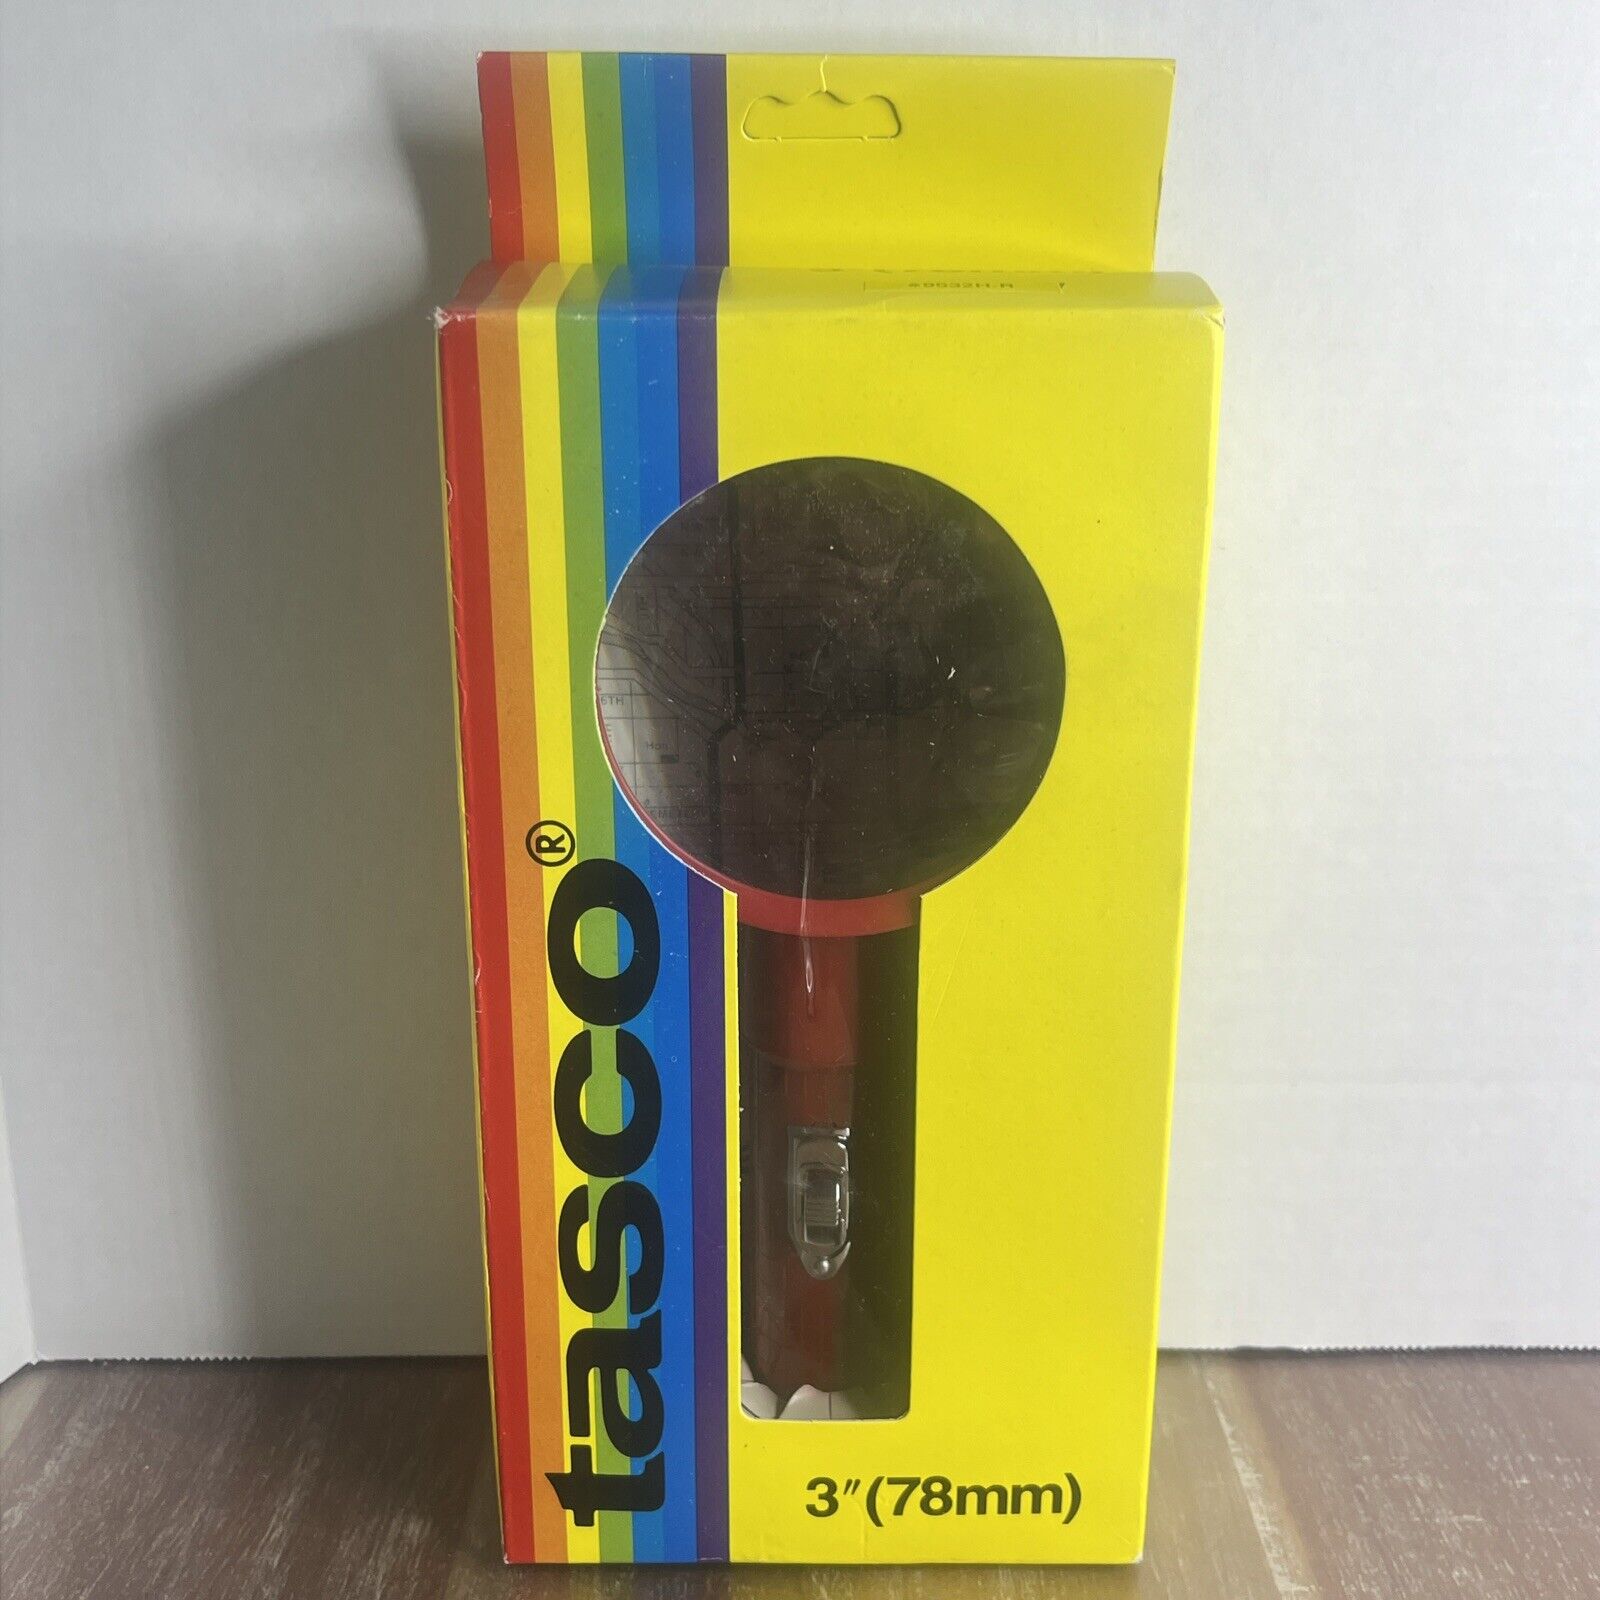 Rare Vintage 1983 TASCO Magnifying Flashlight 3”-78mm #9532H-R Brand New